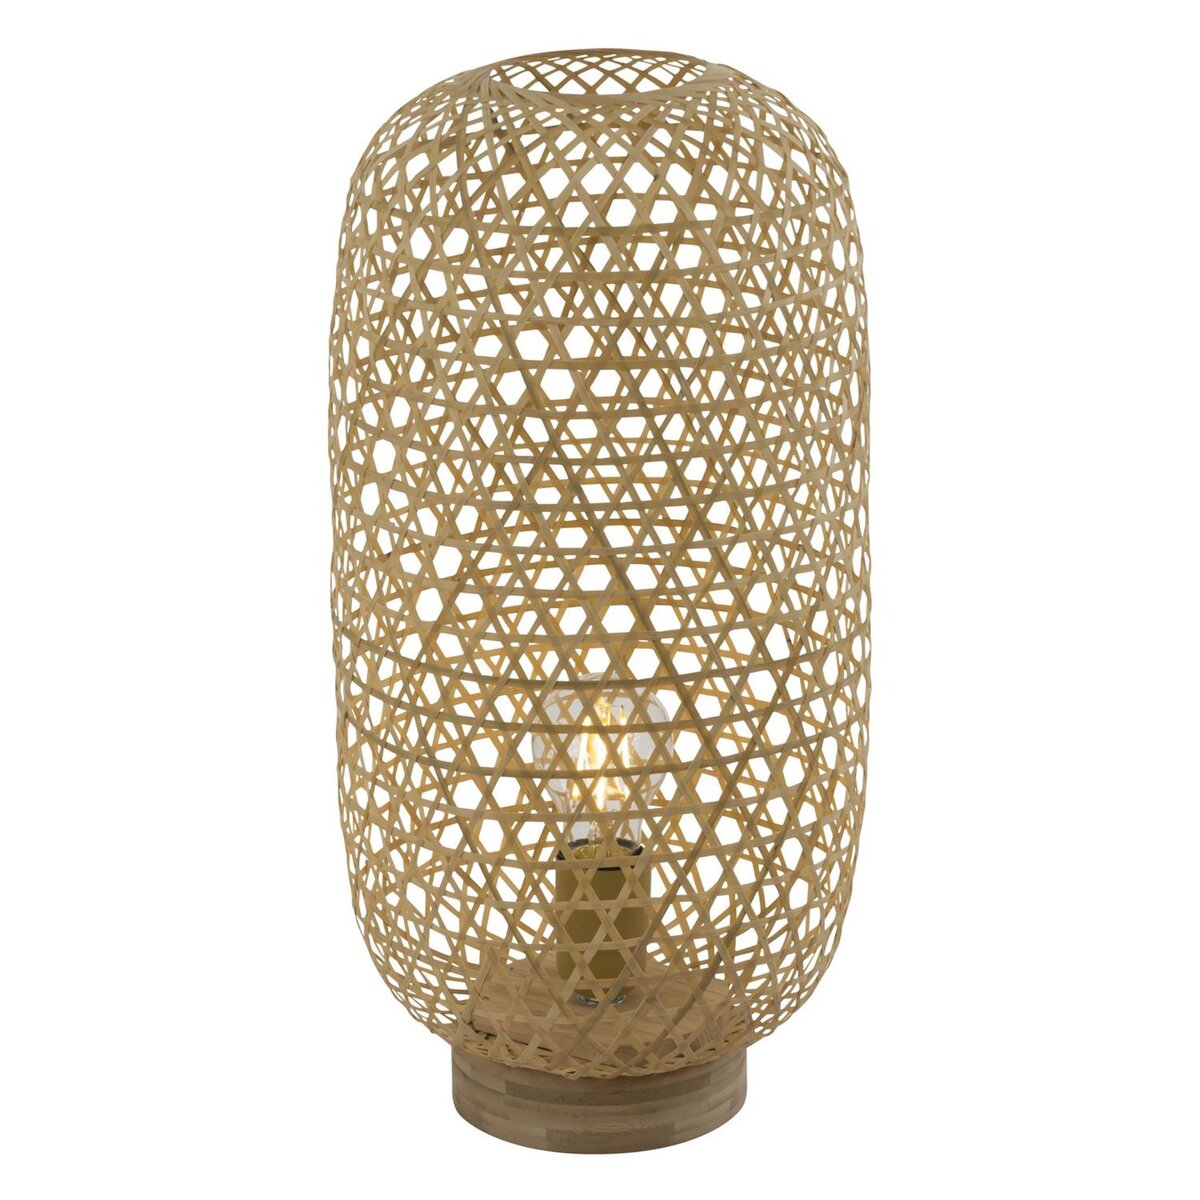  Lampe à poser design bambou Mirena - Diam. 22 x H. 46 cm - Beige naturel